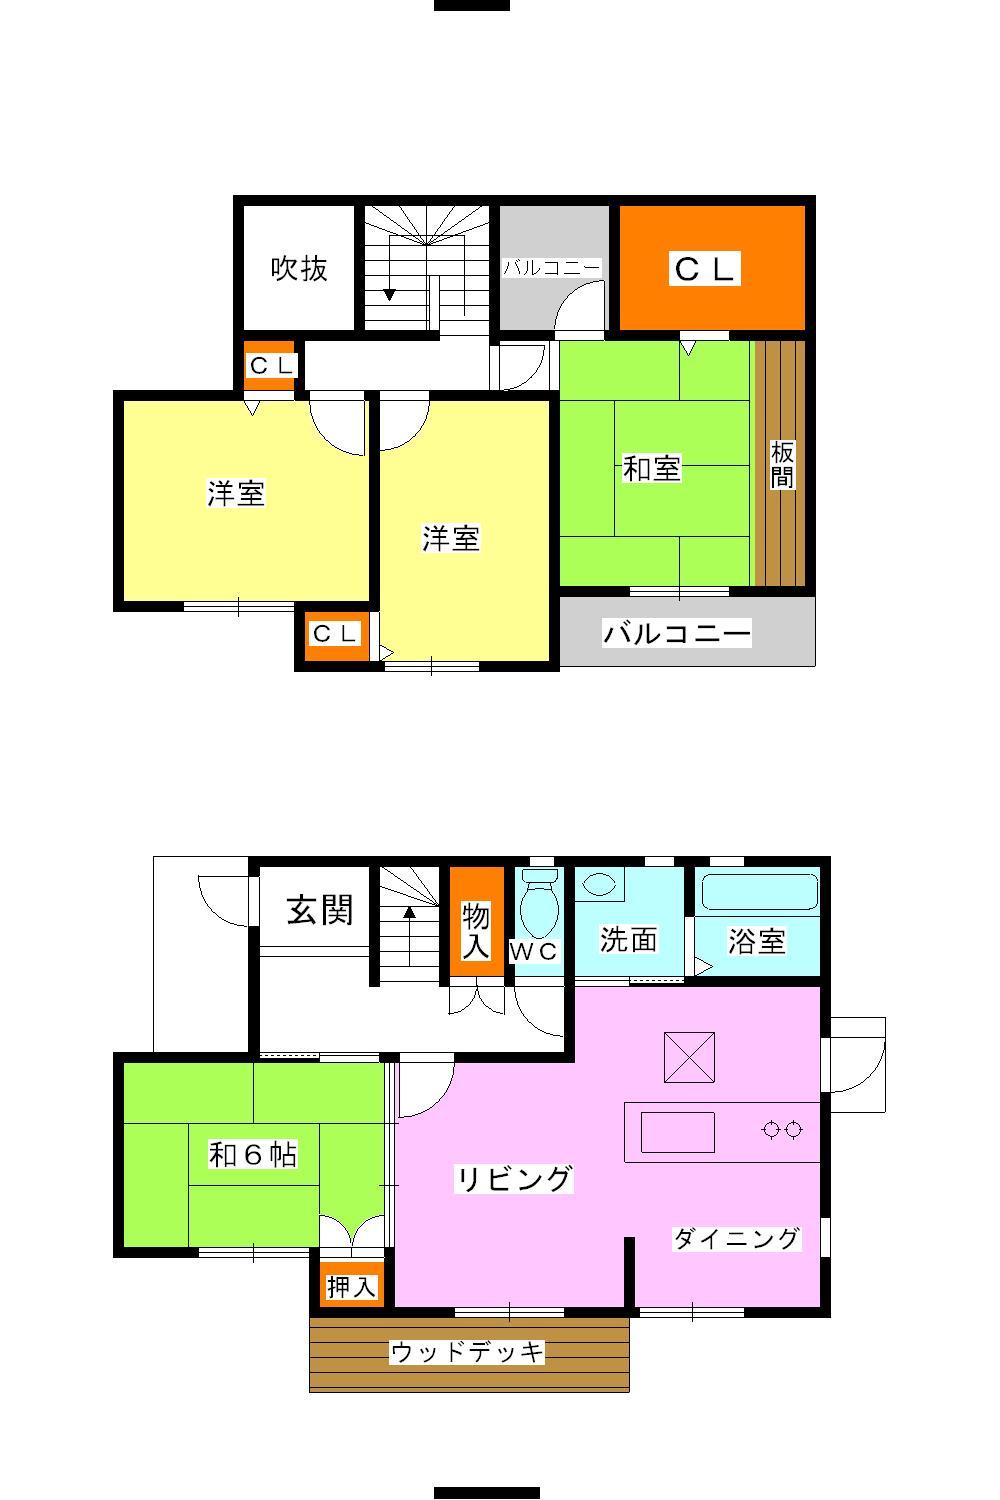 Floor plan. 26,800,000 yen, 4LDK, Land area 201.11 sq m , Building area 102.68 sq m